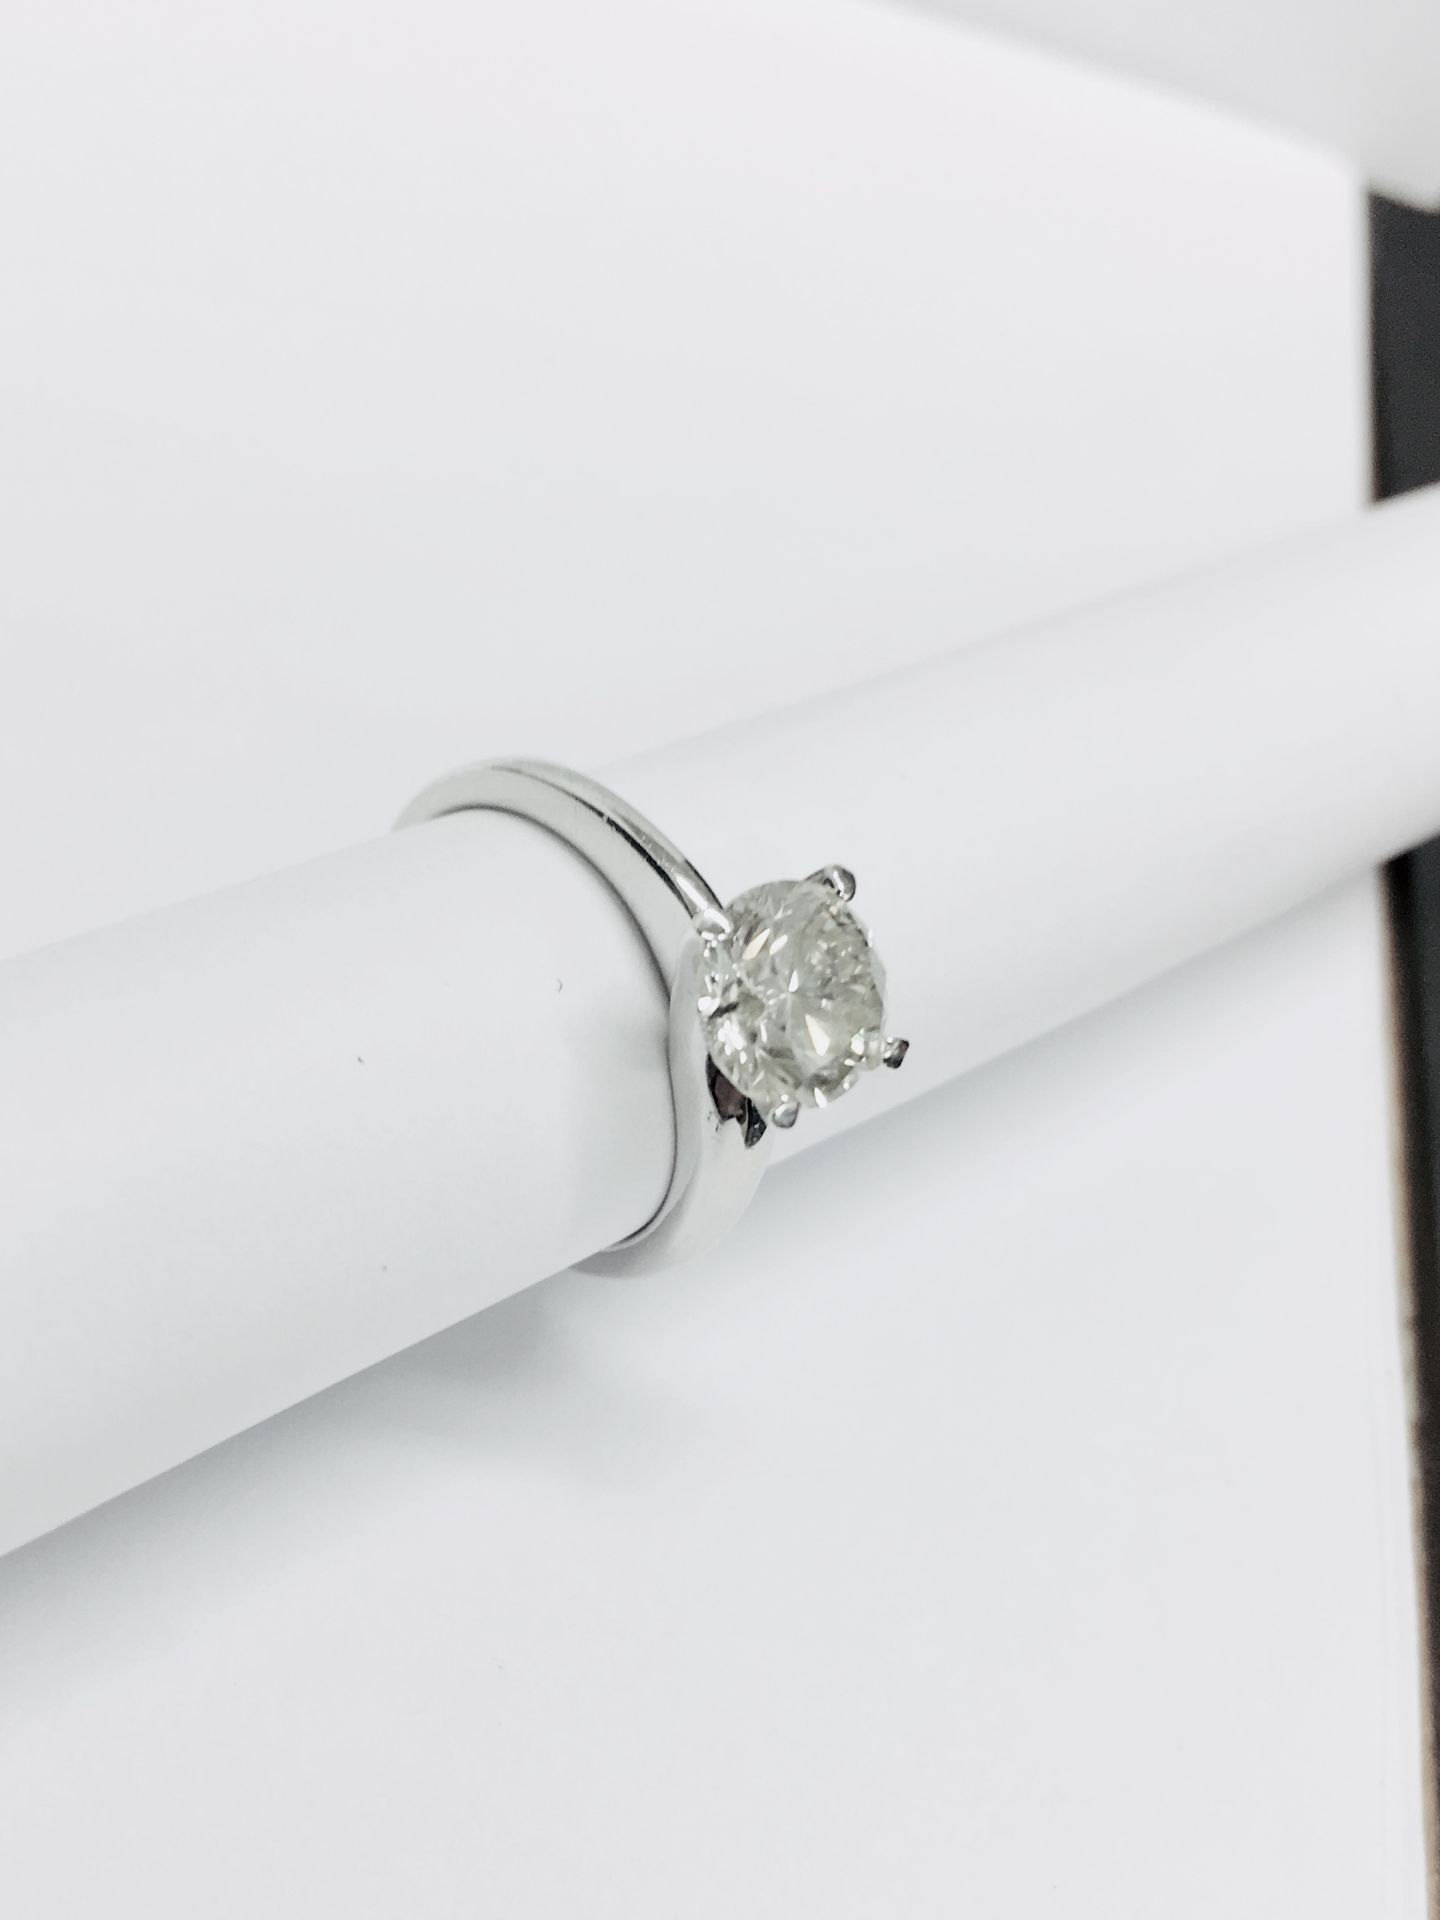 1.64ct Brilliant cut diamond f colour si3 clarity natural ,platinum diamond mount 3.5gms,uk hallmark - Image 3 of 4